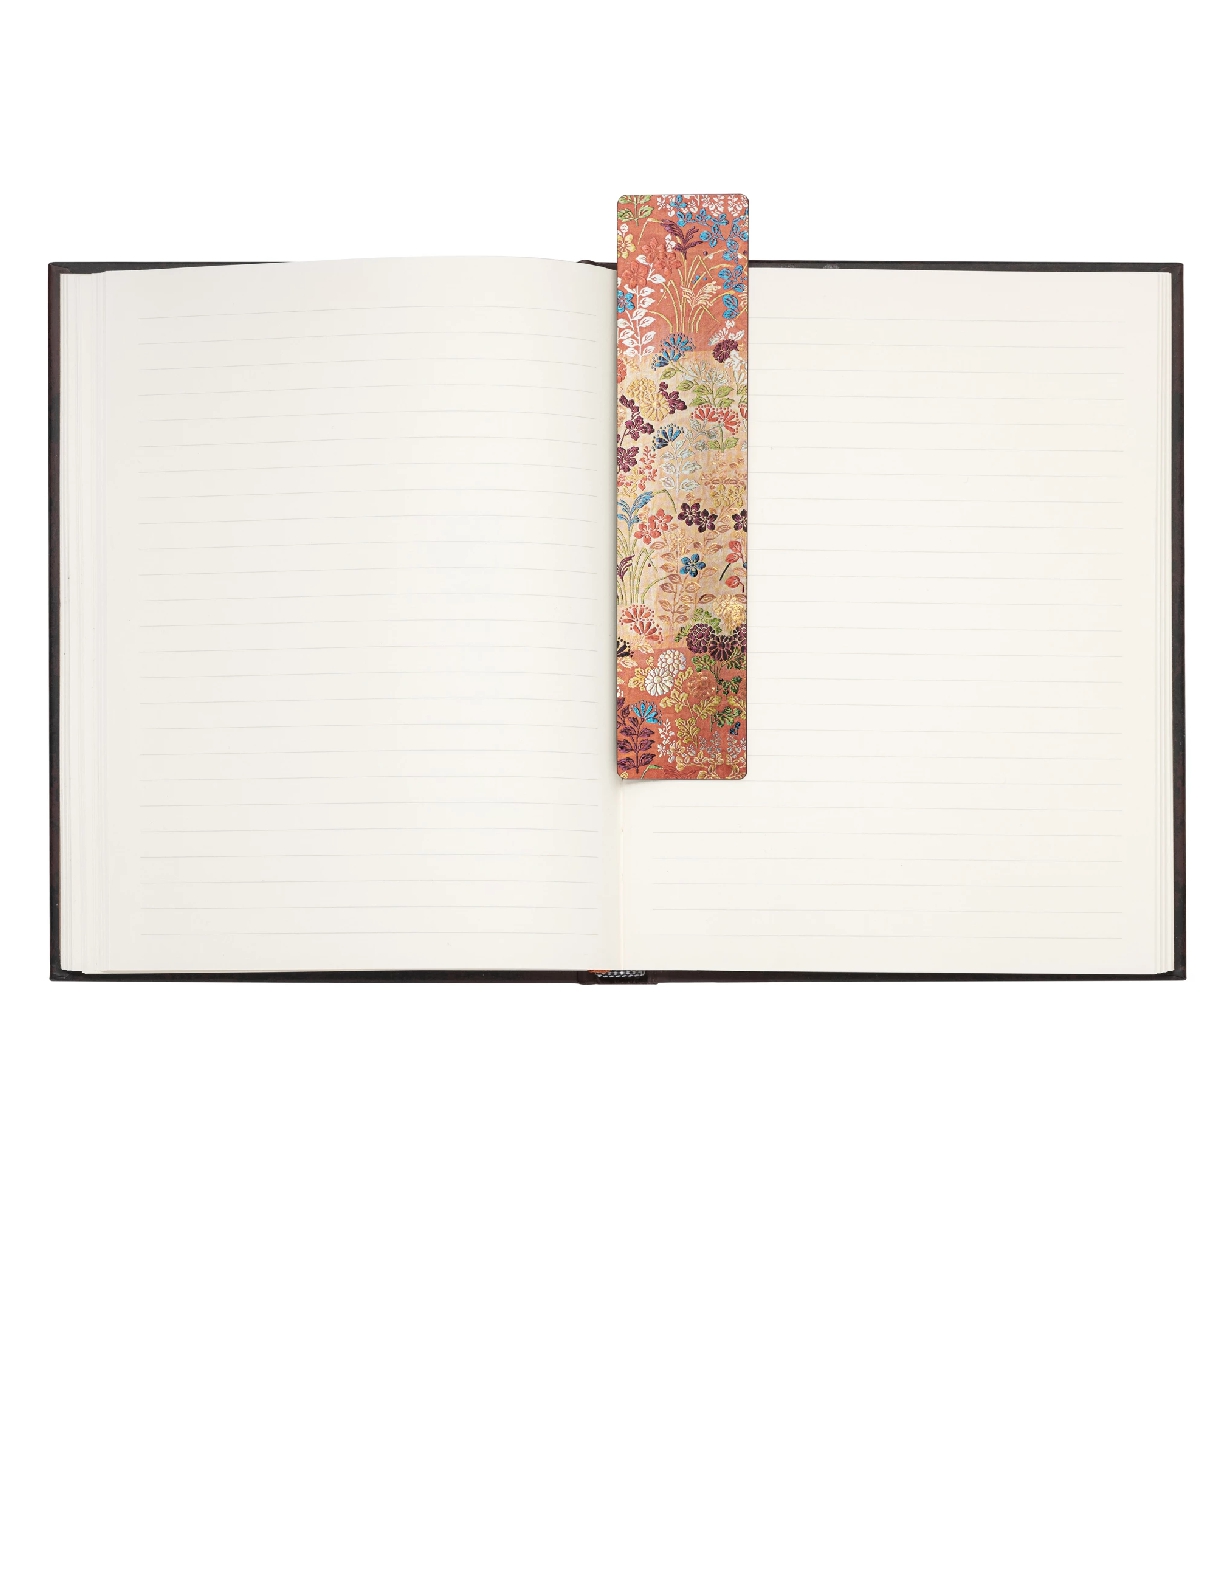 Kara-ori, Japanese Kimono, Bookmark